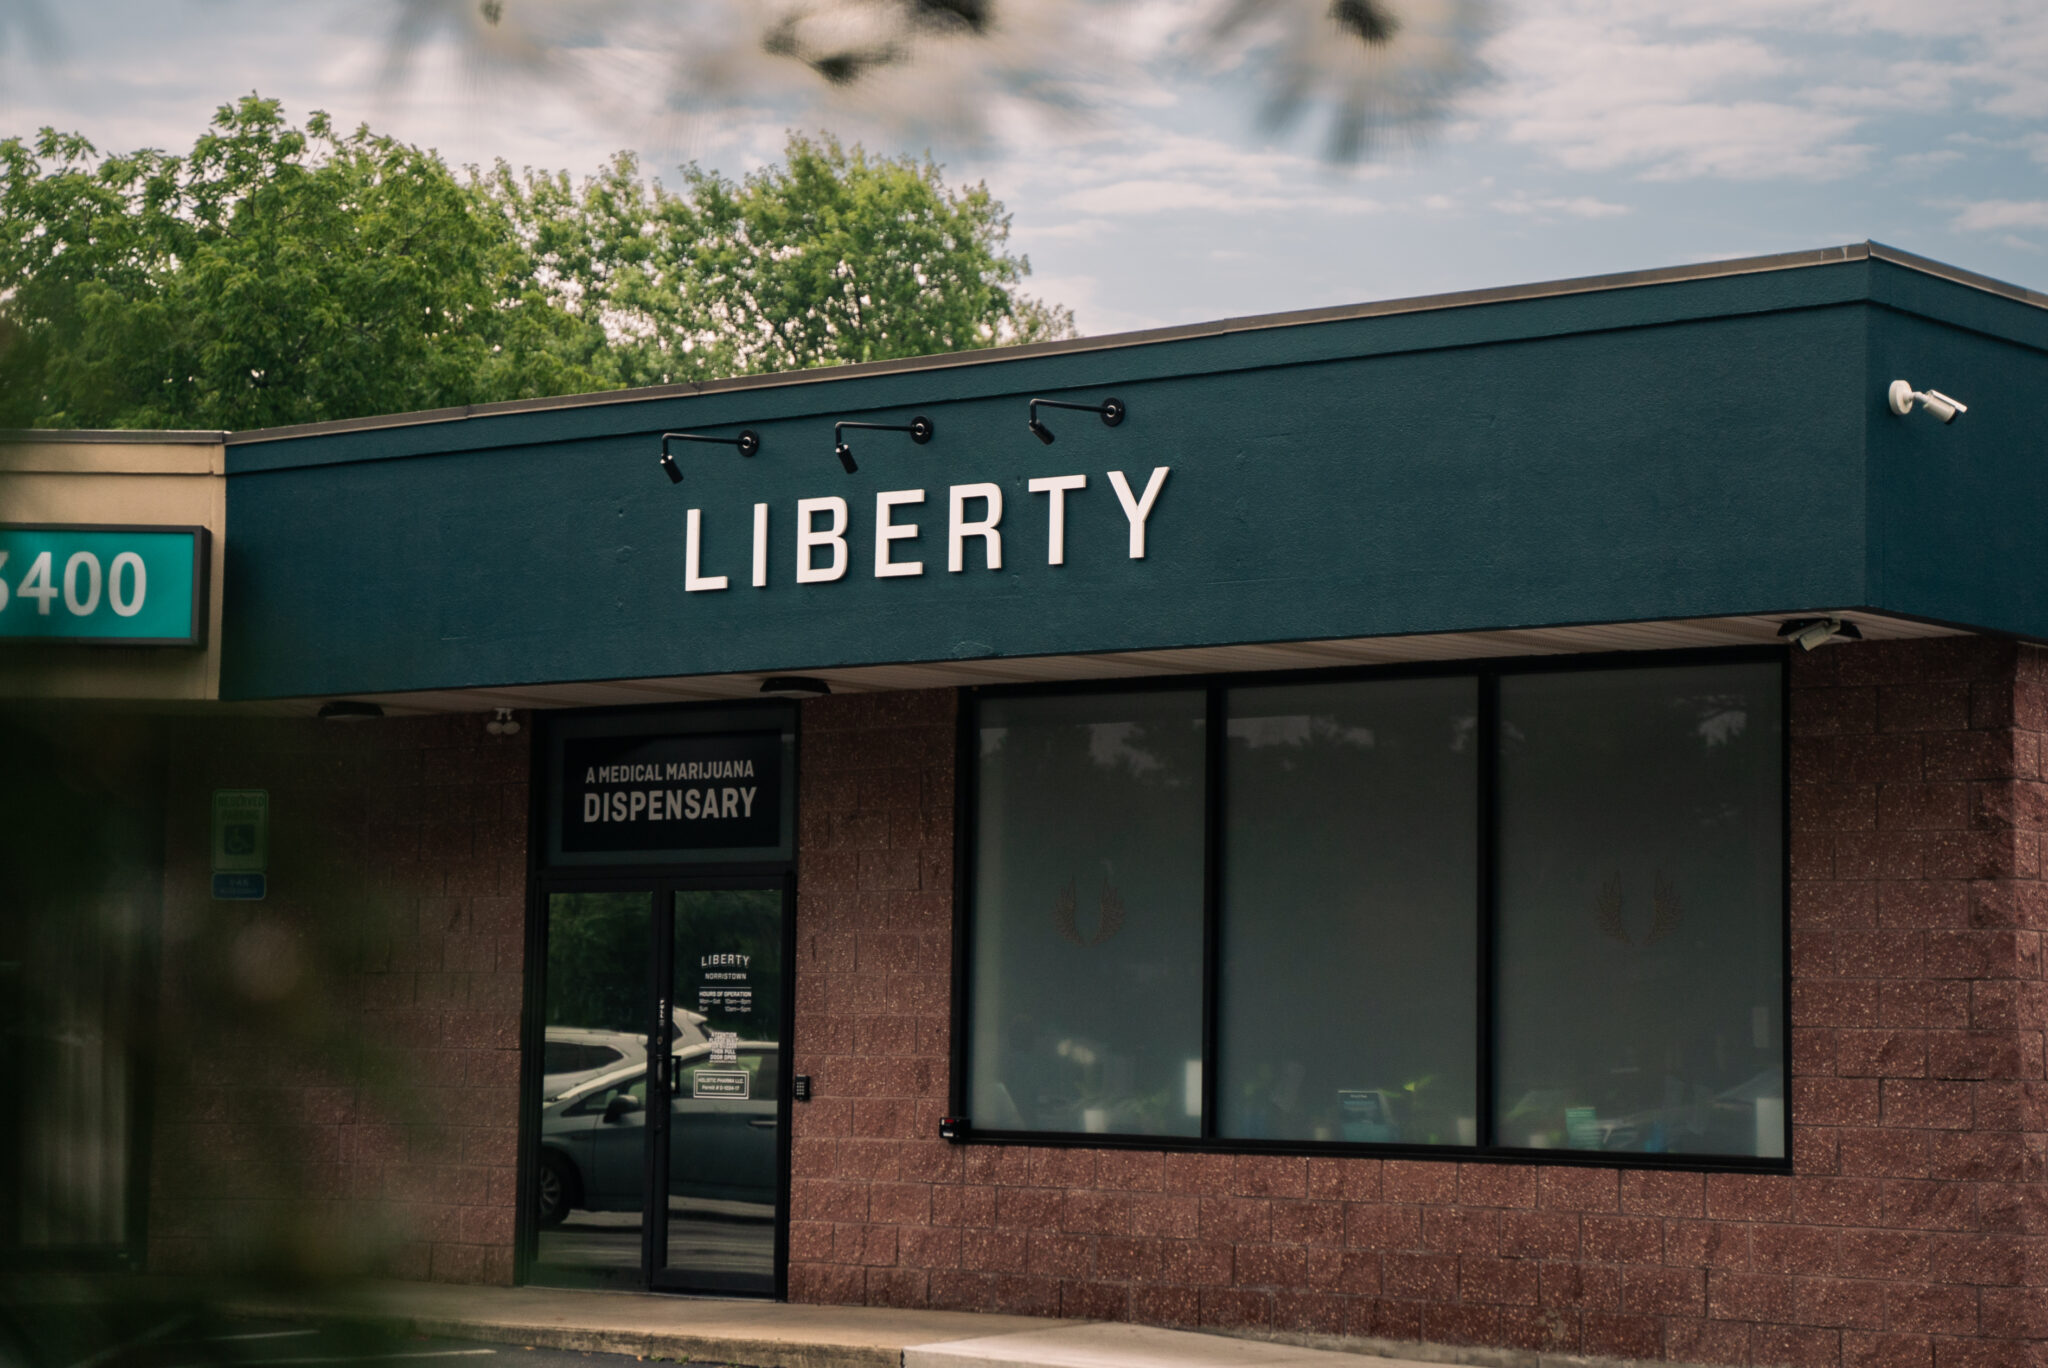 Liberty Norristown Dispensary exterior shot of entrance